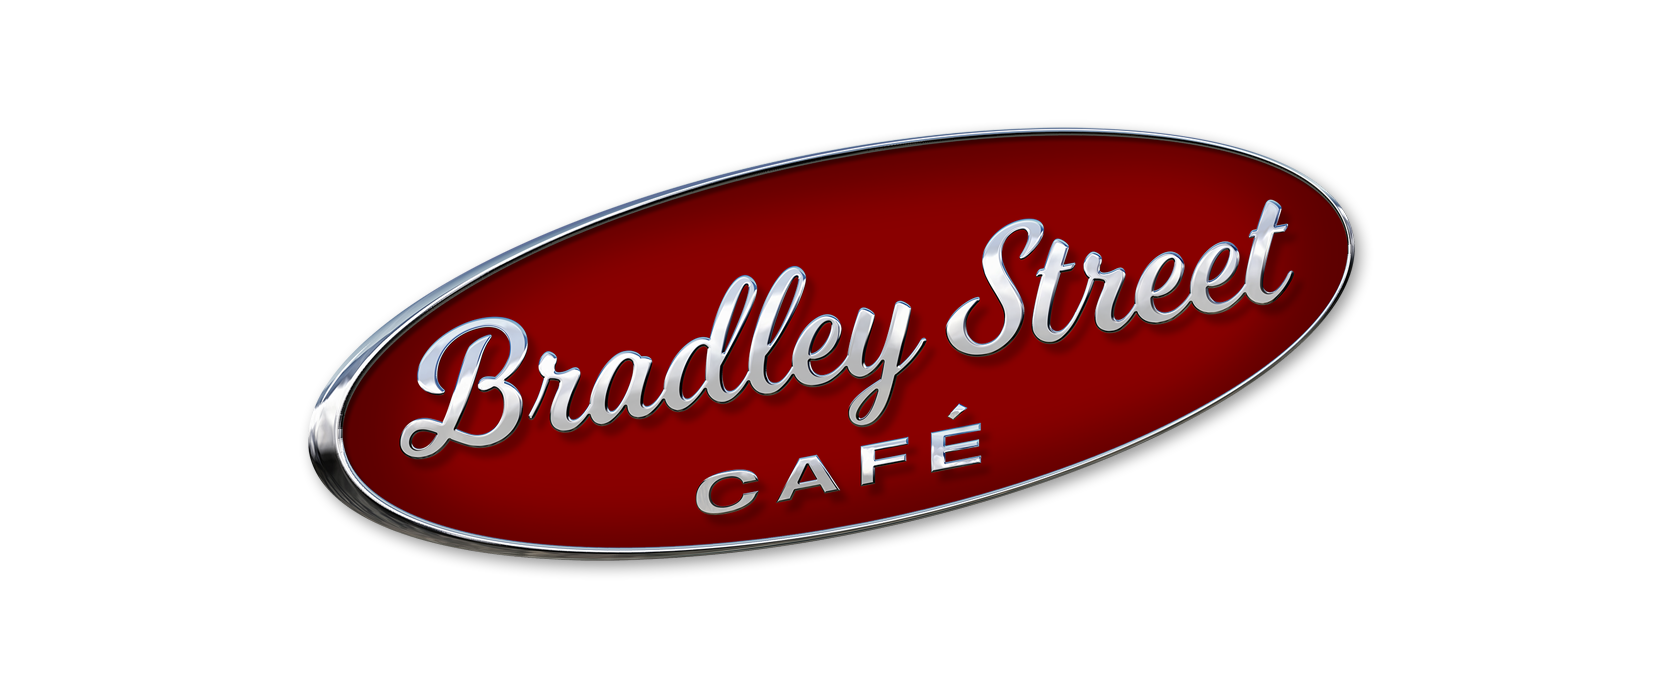 Bradley Street Cafe Logo